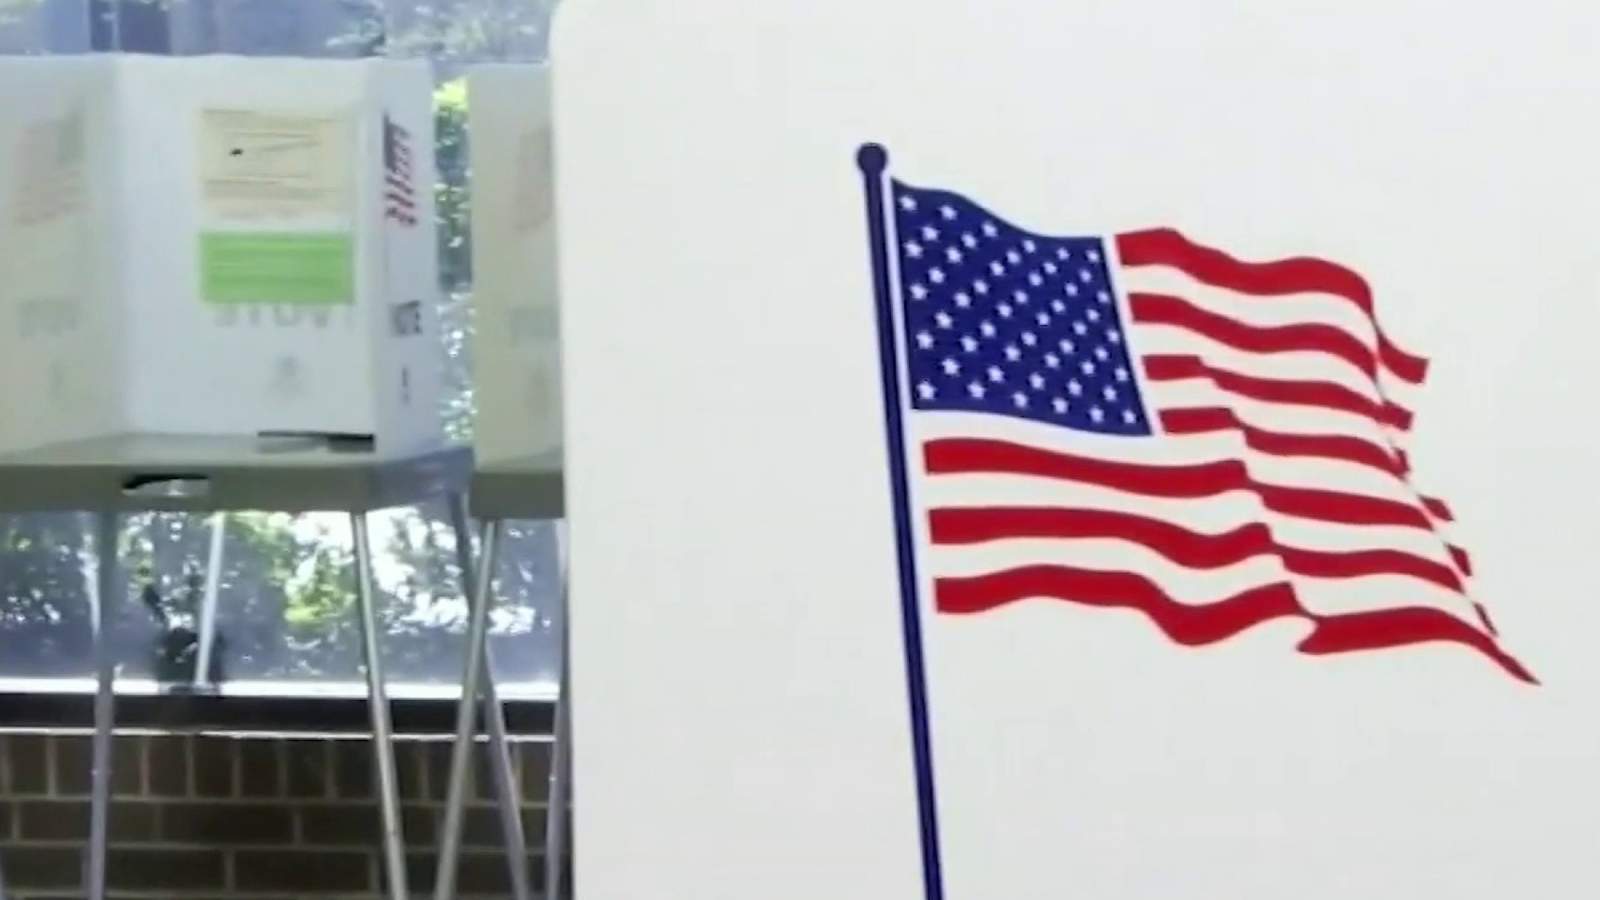 Voter registration remains on track in Orange County, despite COVID-19